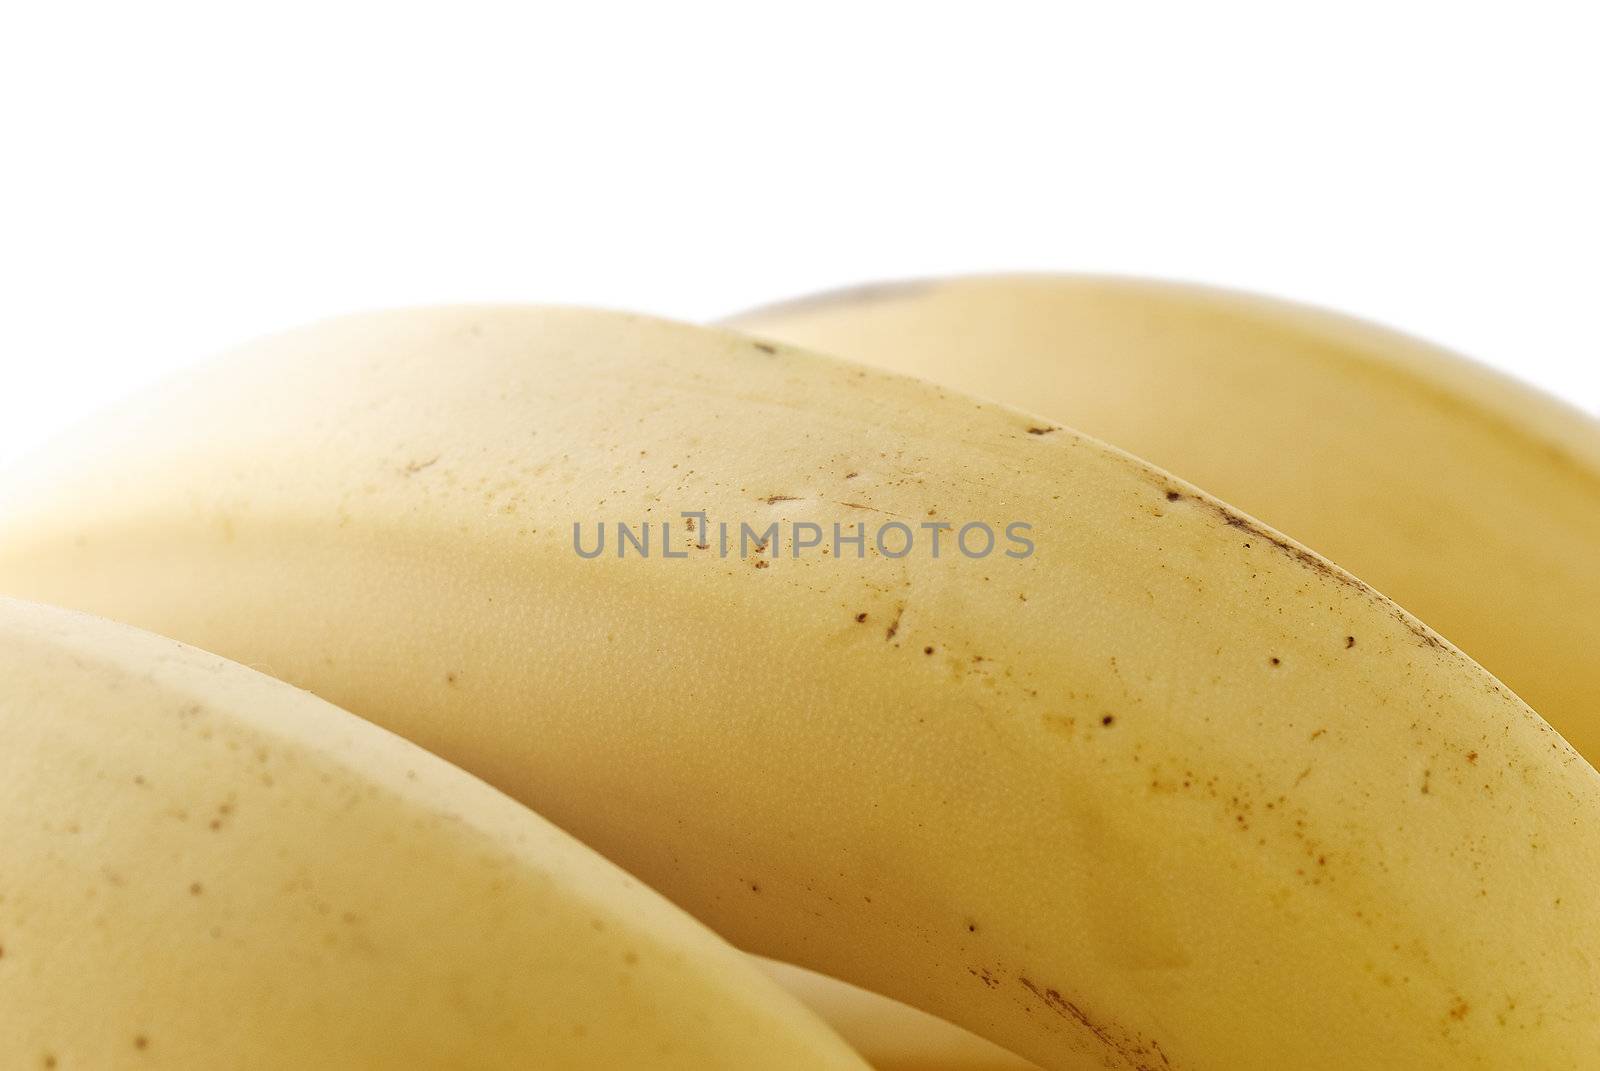 Abstract fruit texture background, banana closeup image.